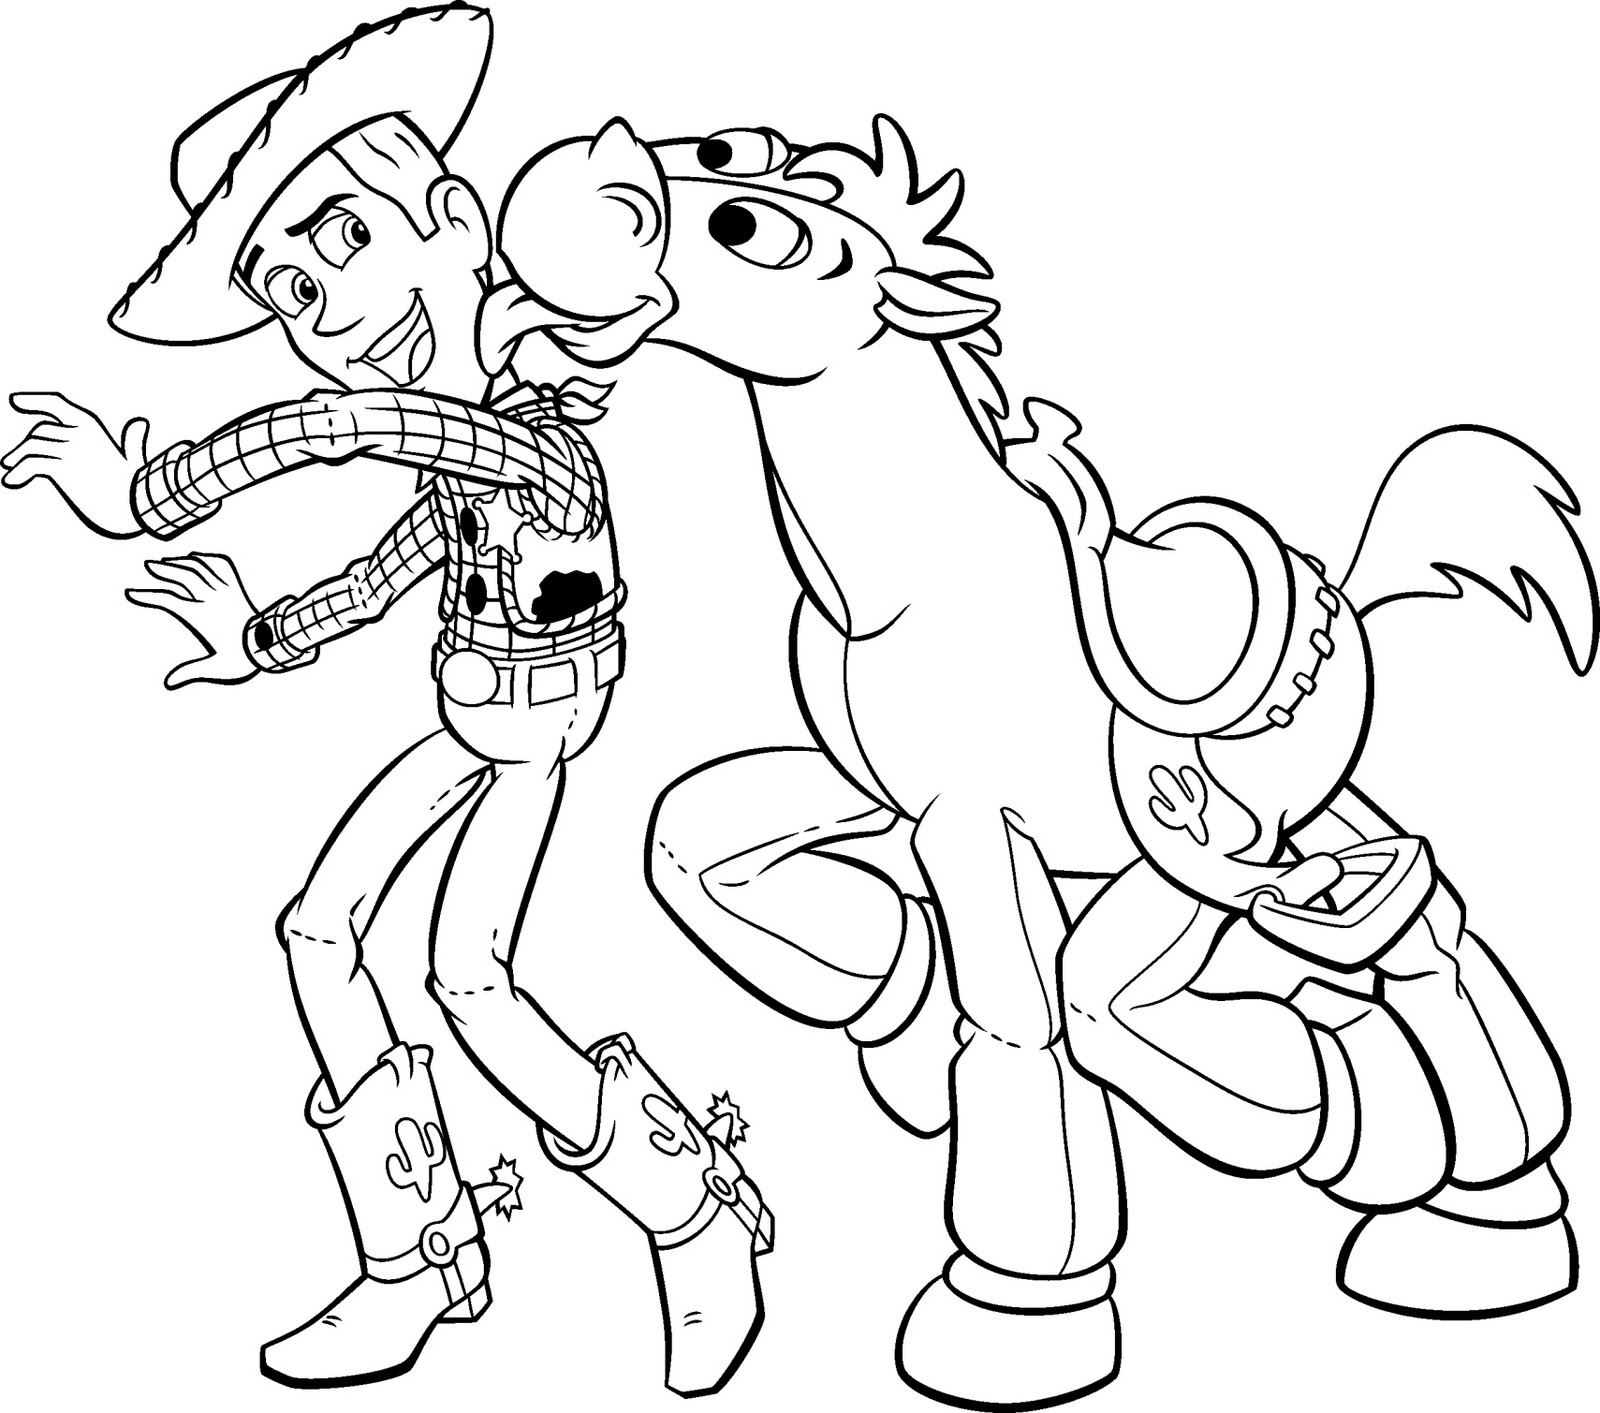 Woody And Bullseye Having Fun Coloring Page